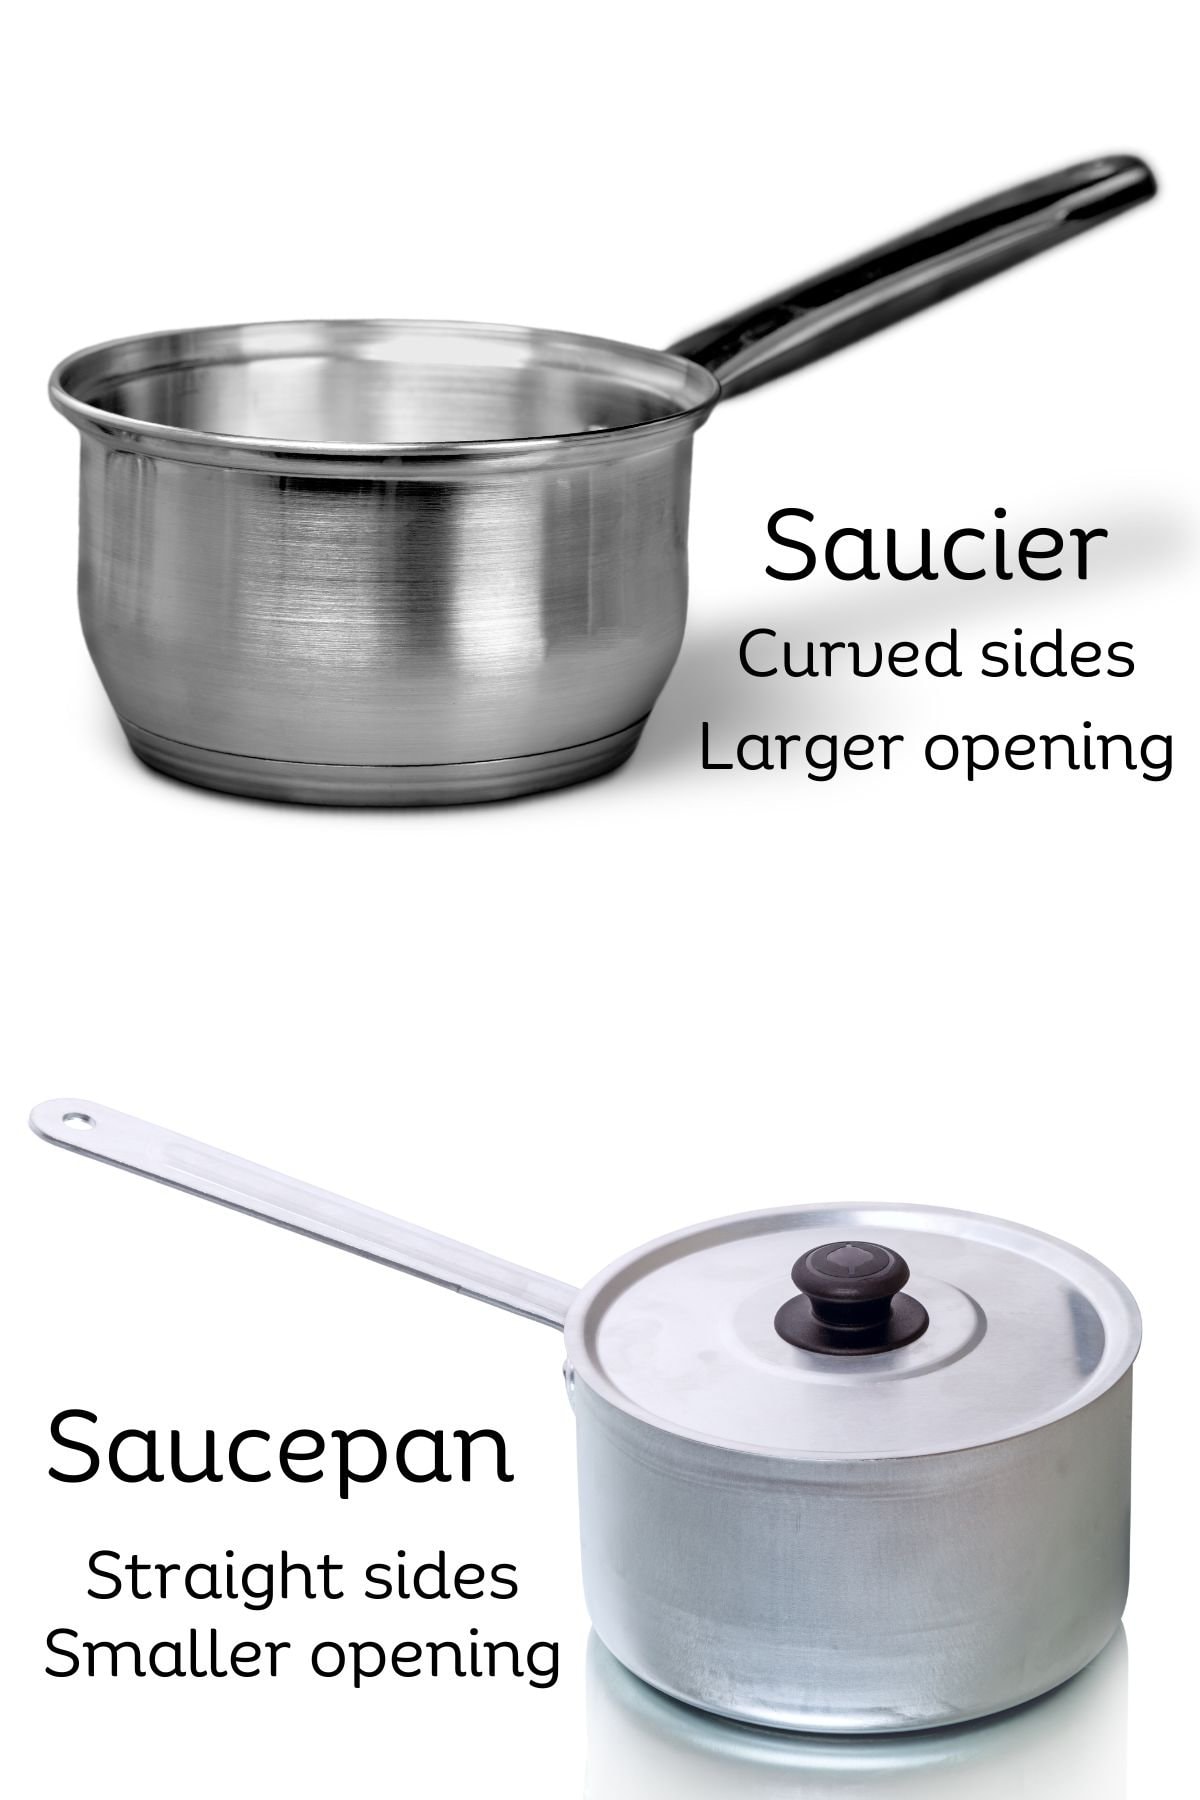 An image comparison of saucepans and sauciers.